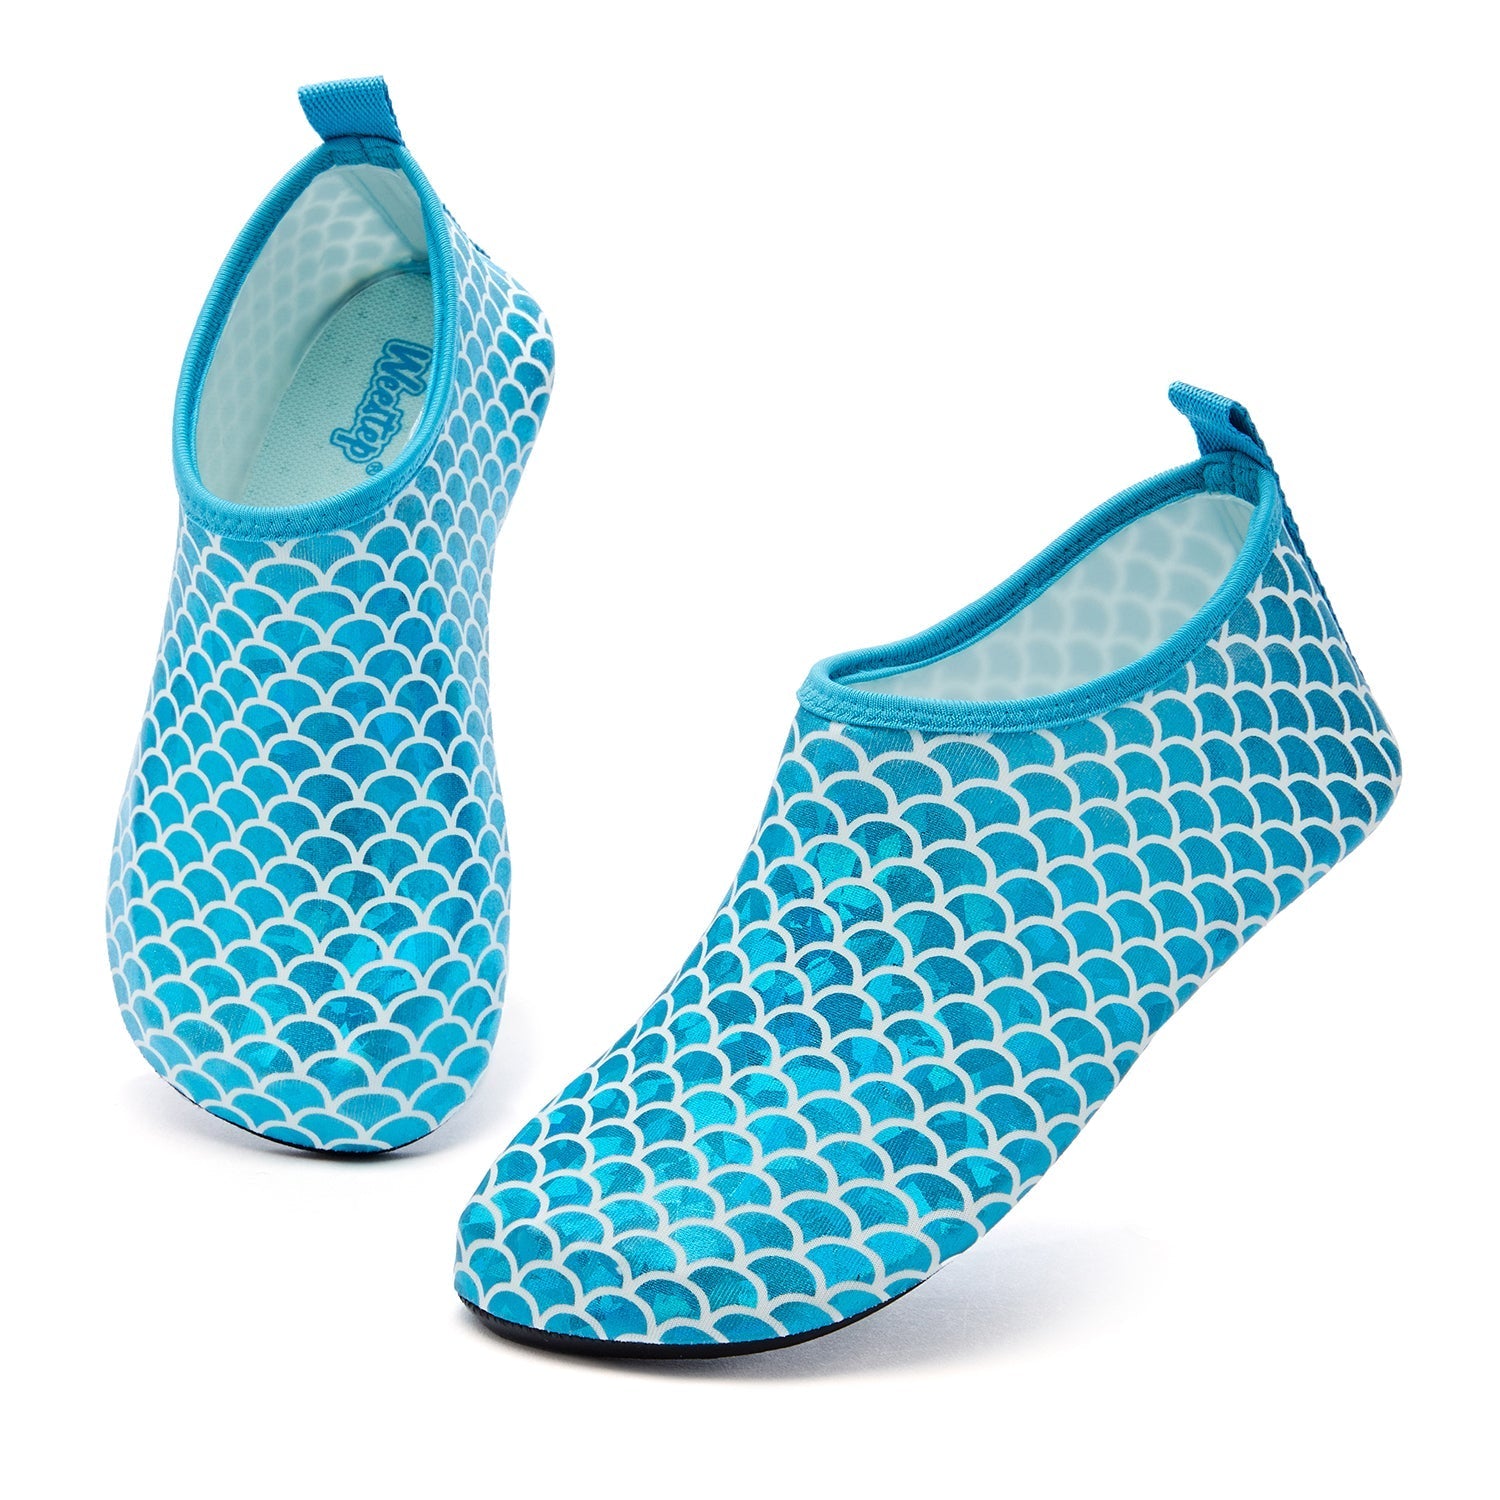 Aqua Sock Shoes Mermaid Tale Style